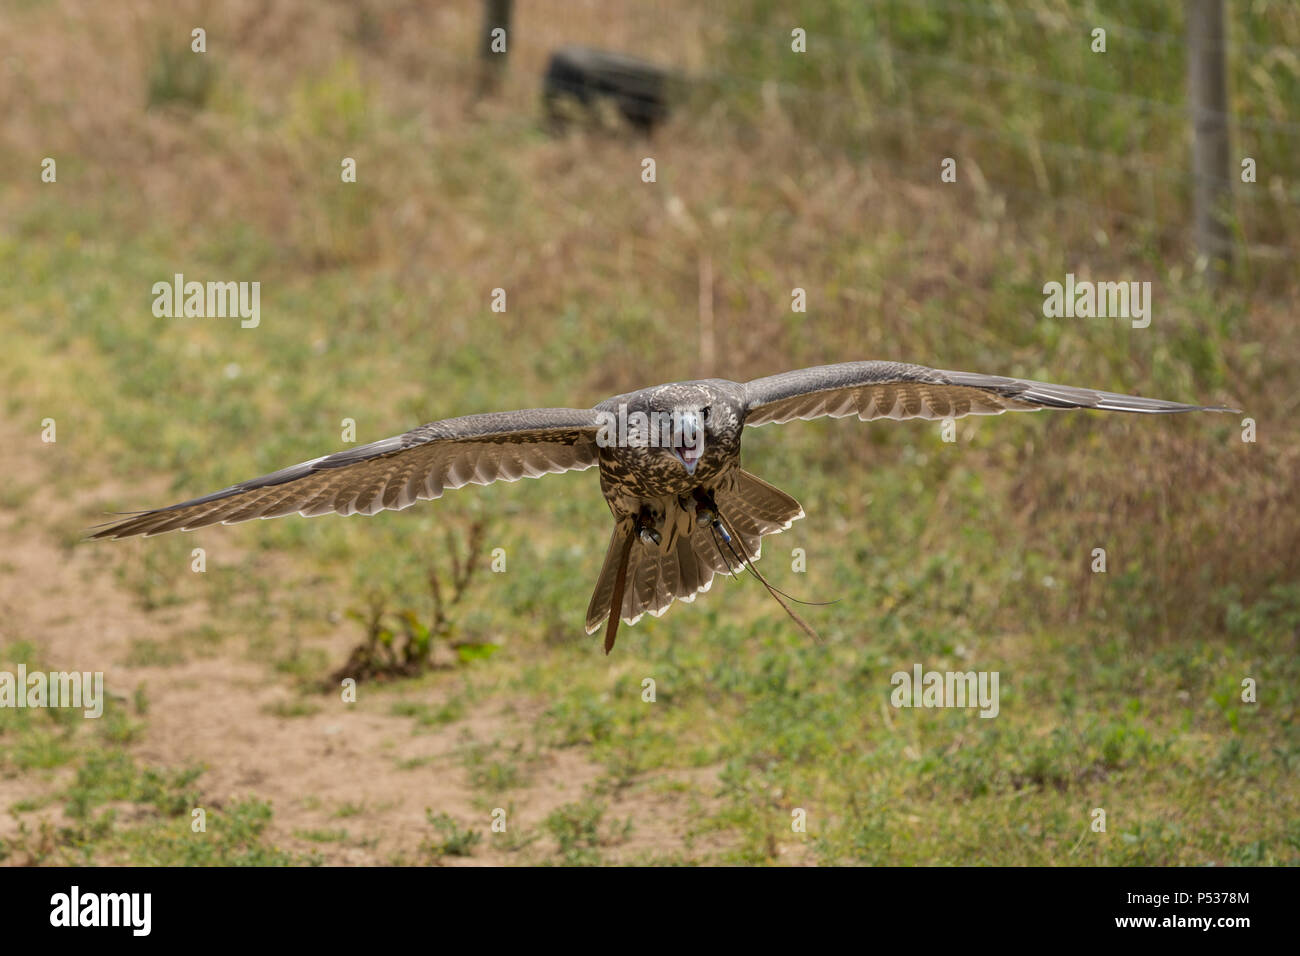 Gyr x saker falcon flying in flight Stock Photo